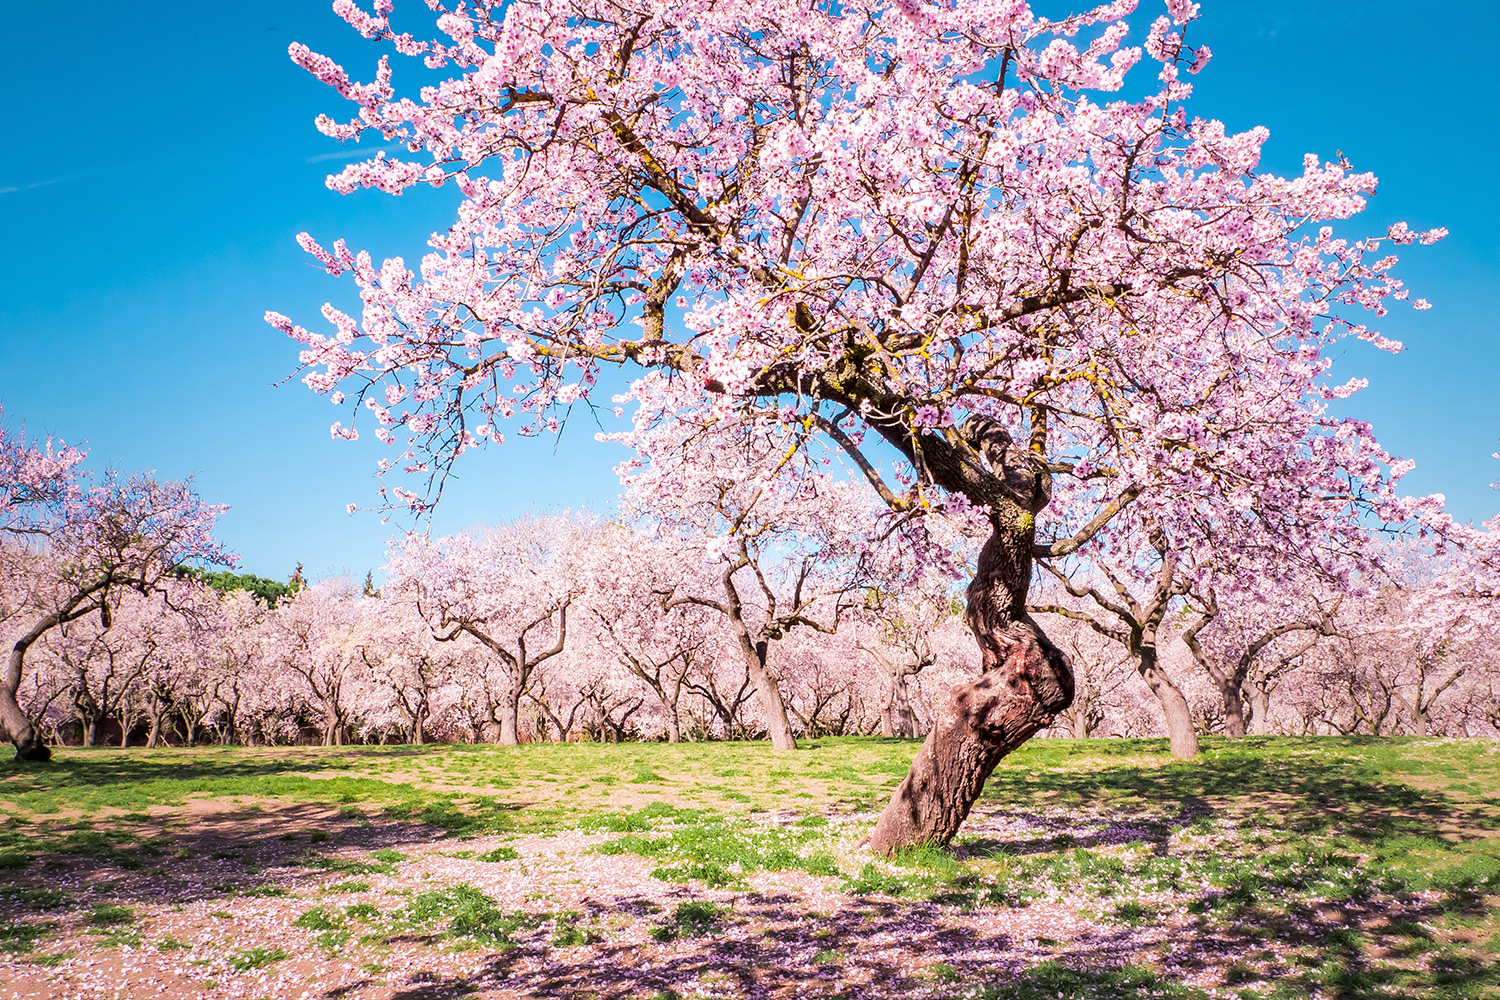 Almond trees in blossom at Quinta de los Molinos